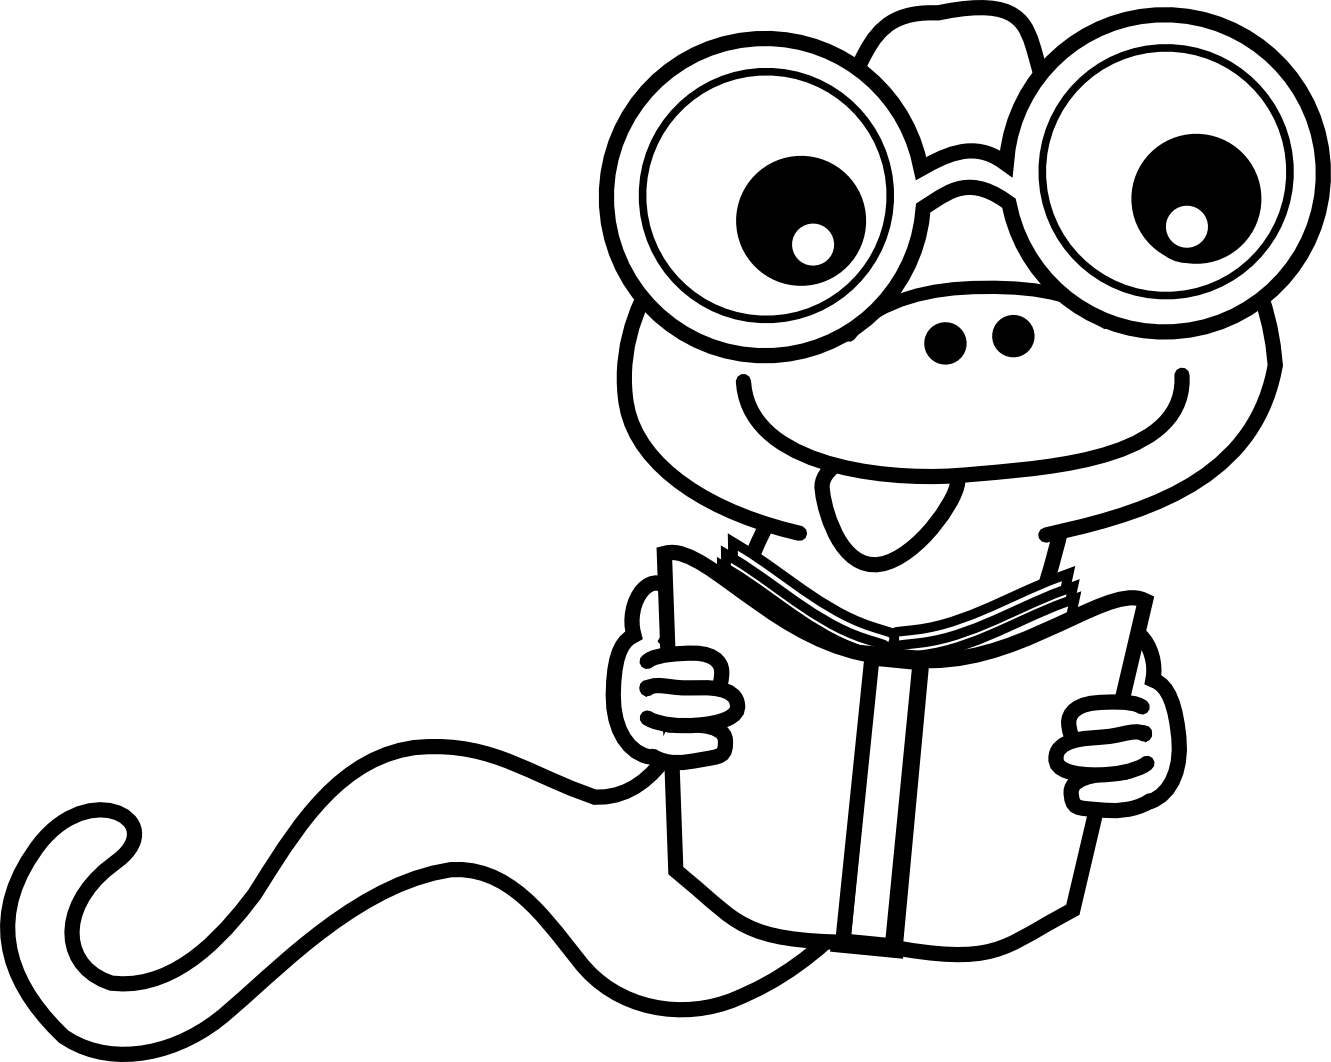 School Books Clipart Black And White | Clipart Panda - Free ...